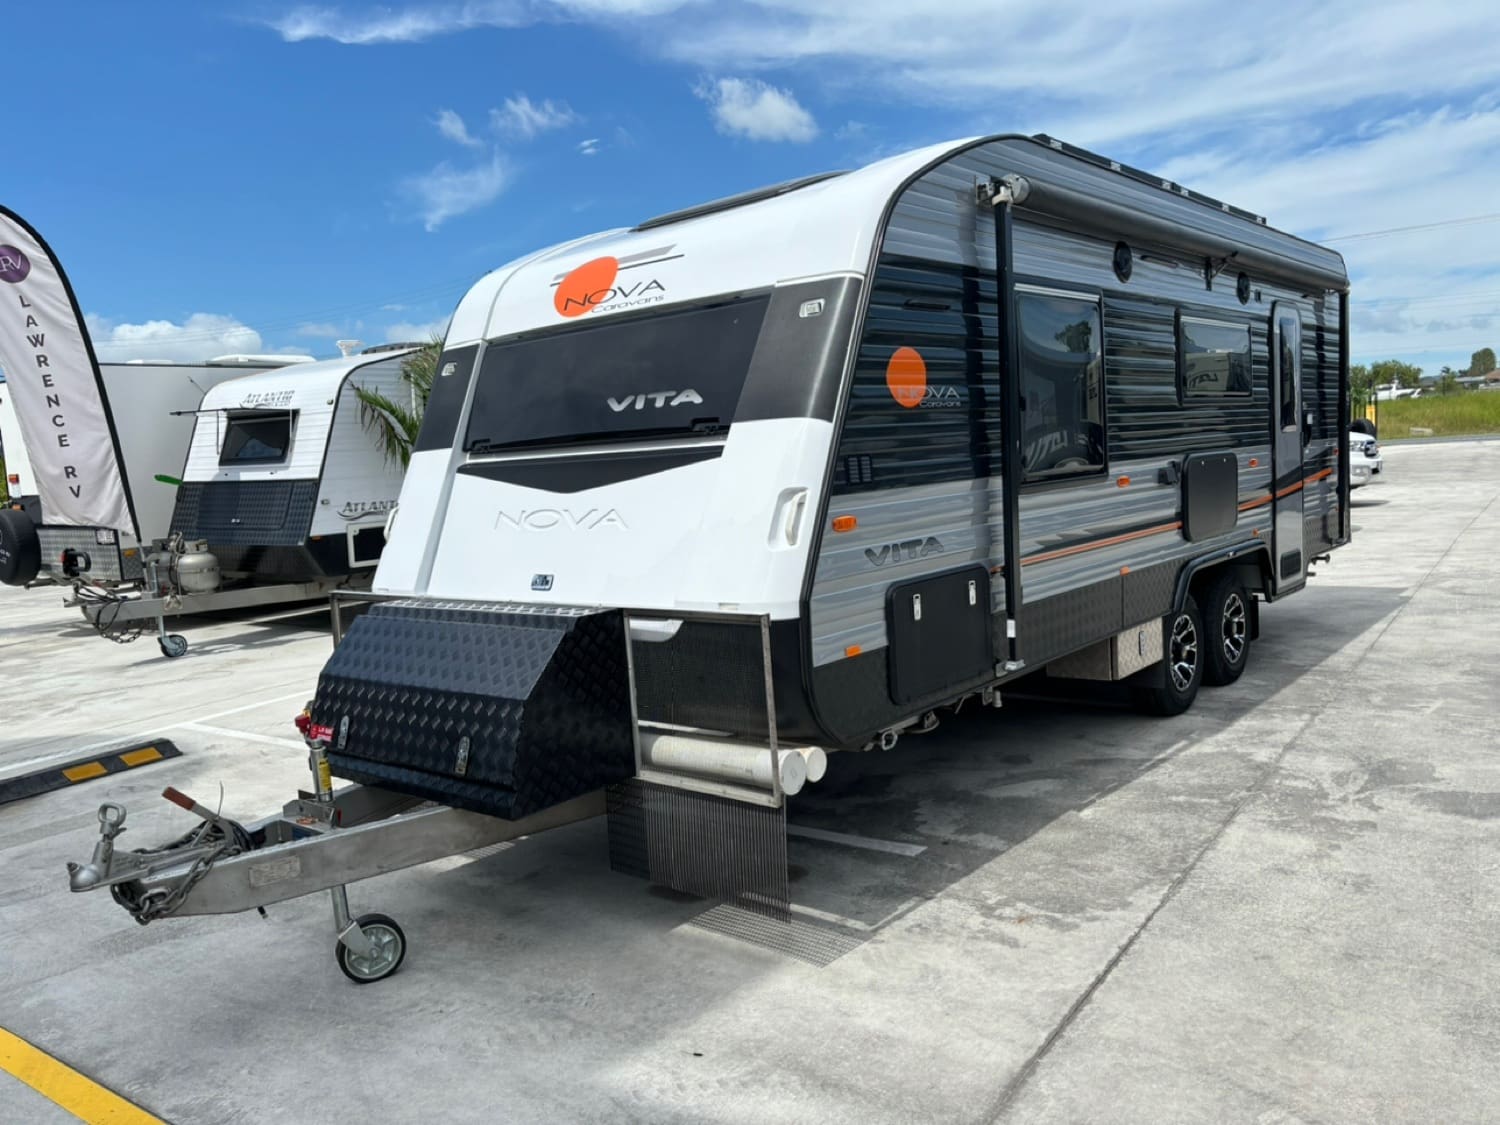 NOVA VITA - Caravans